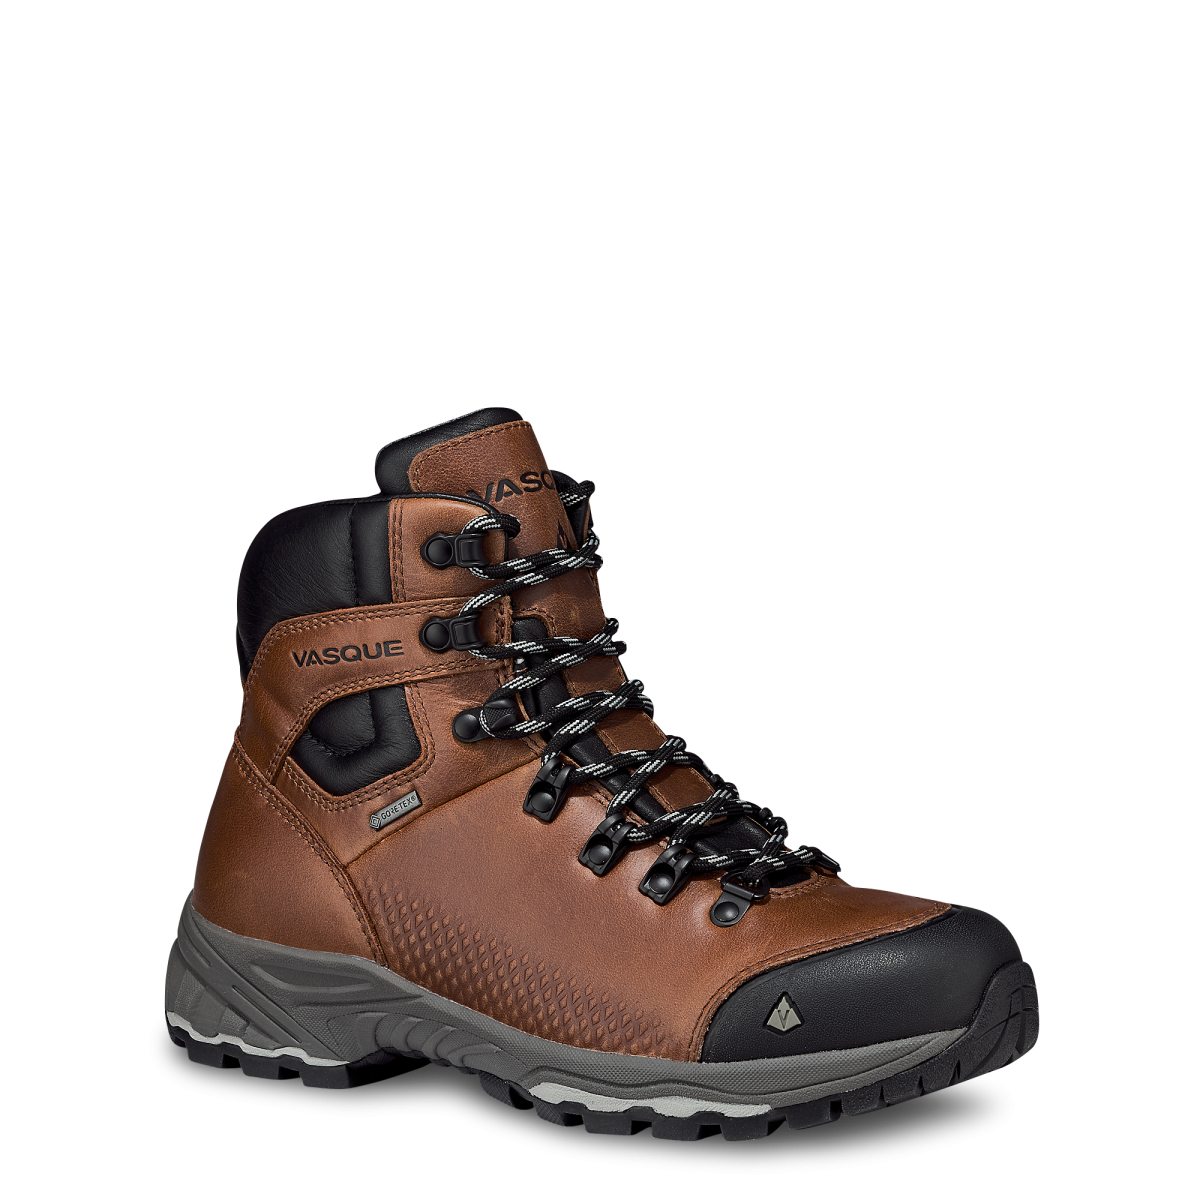 Vasque St. Elias FG GTX Waterproof Hiking Boots for Ladies - Cognac - 8M